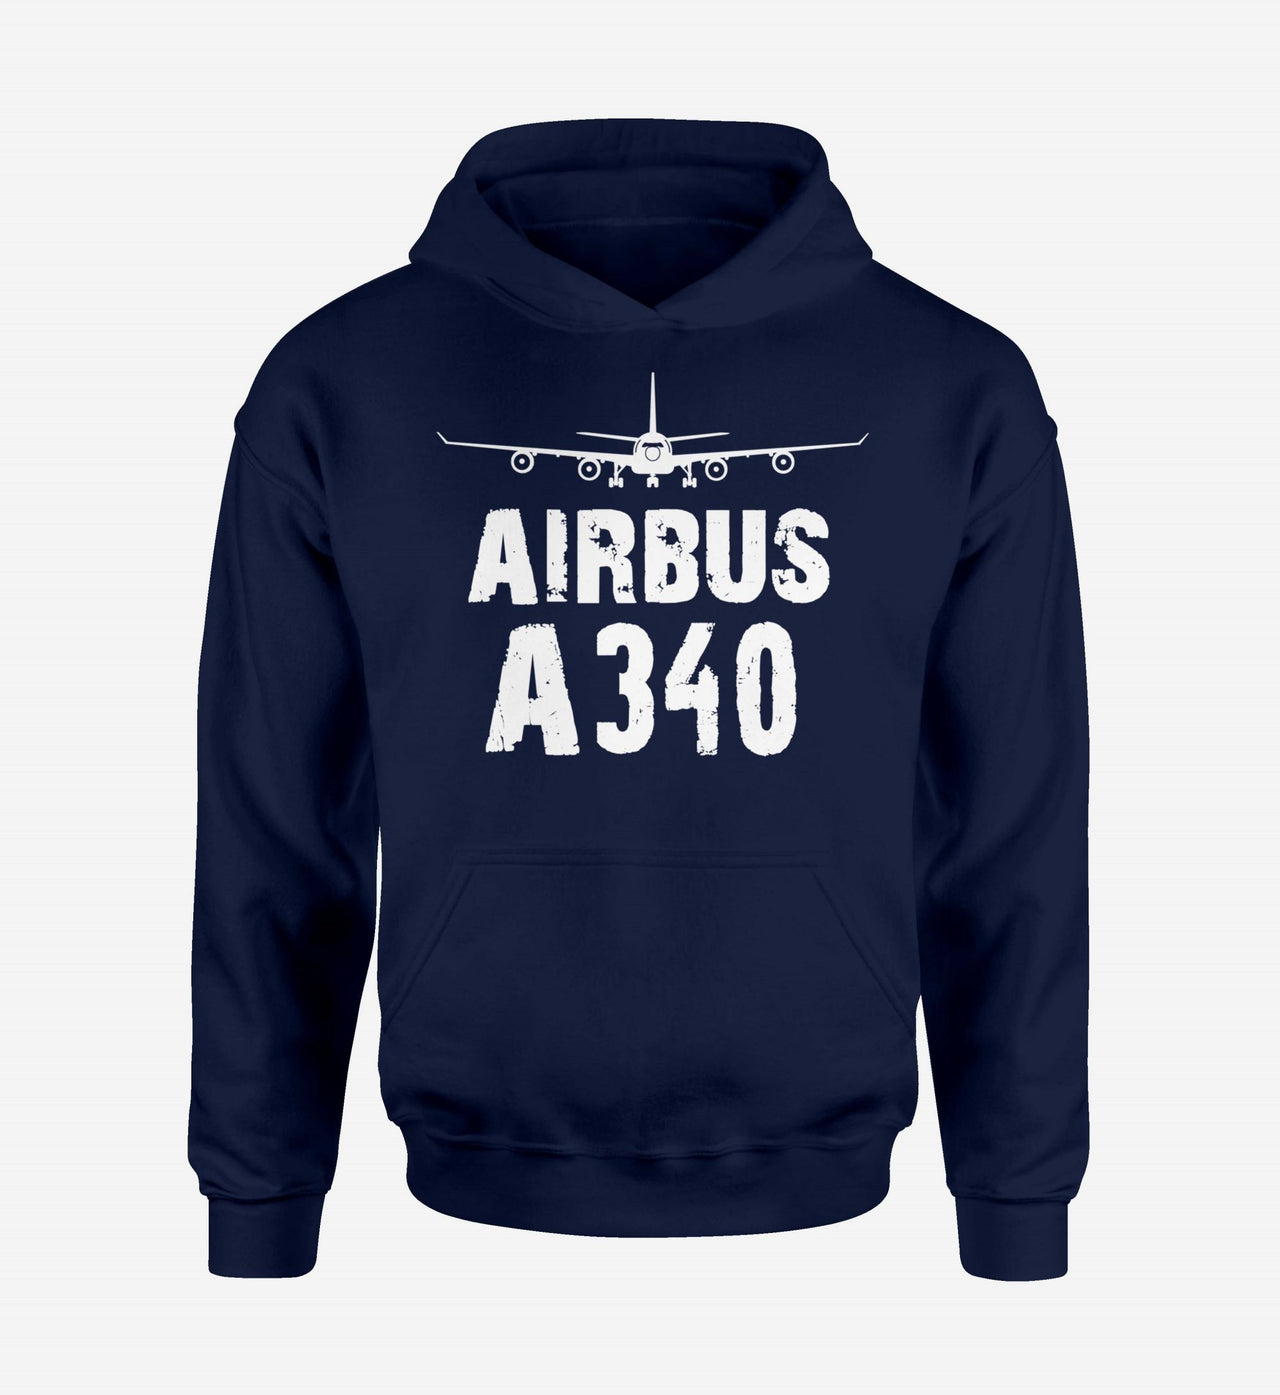 Airbus A340 & Plane Designed Hoodies